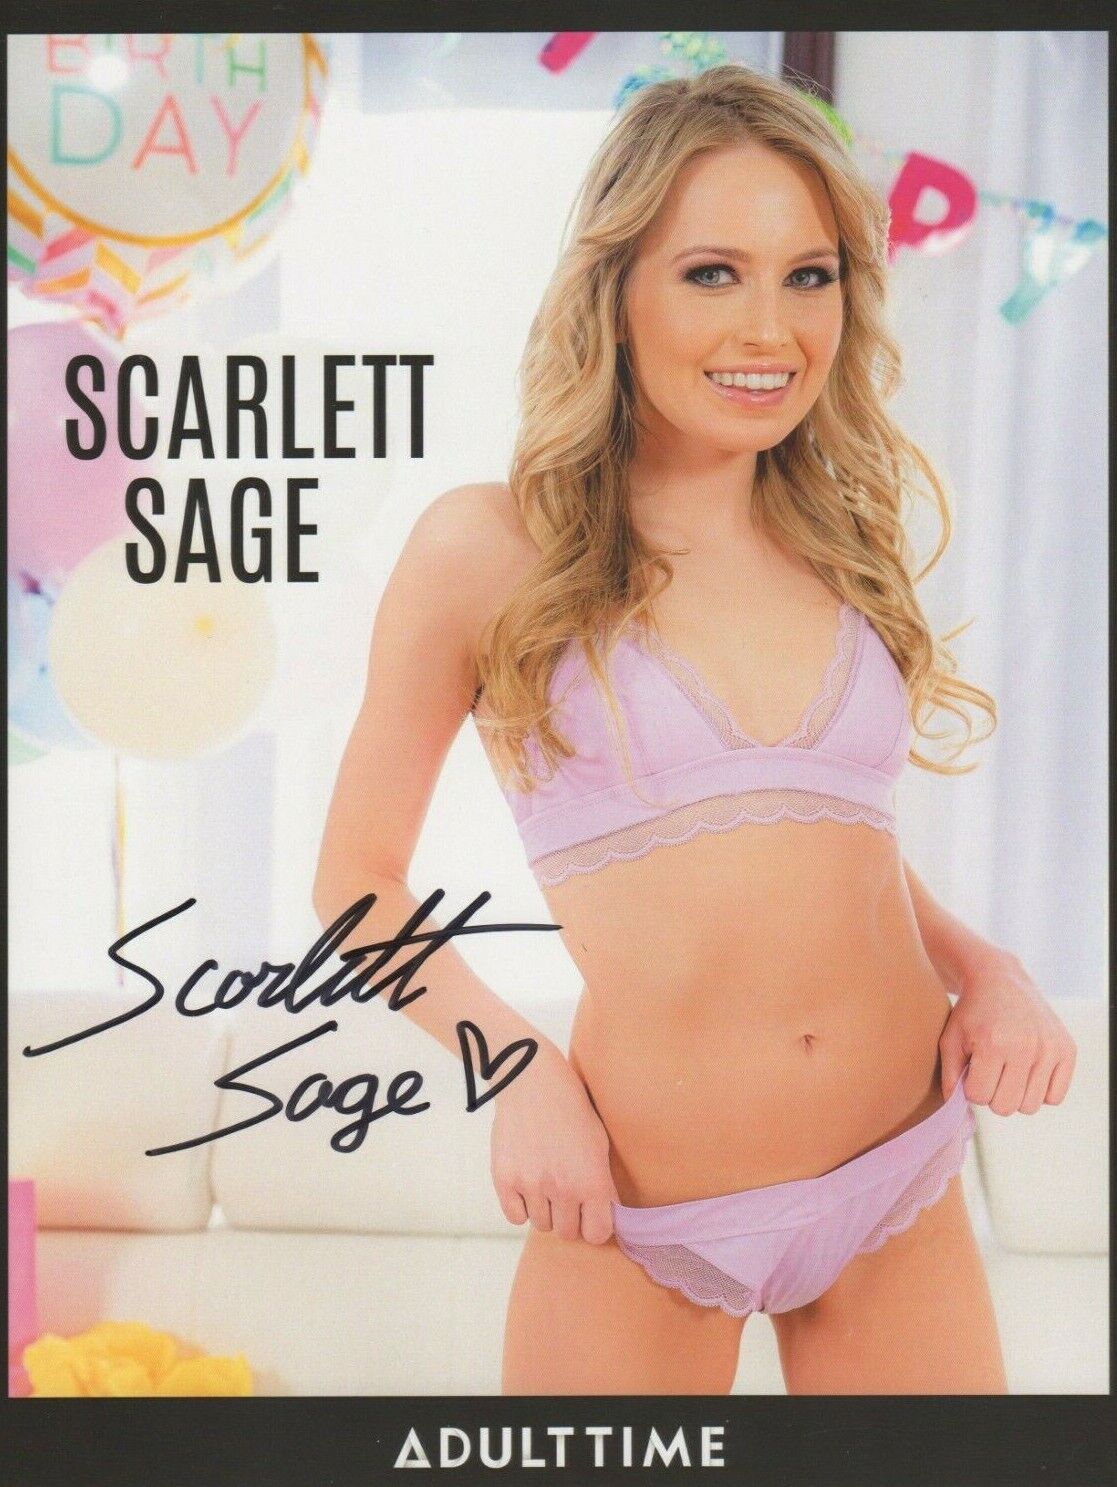 afzal rasool recommends Scarlett Sage More People